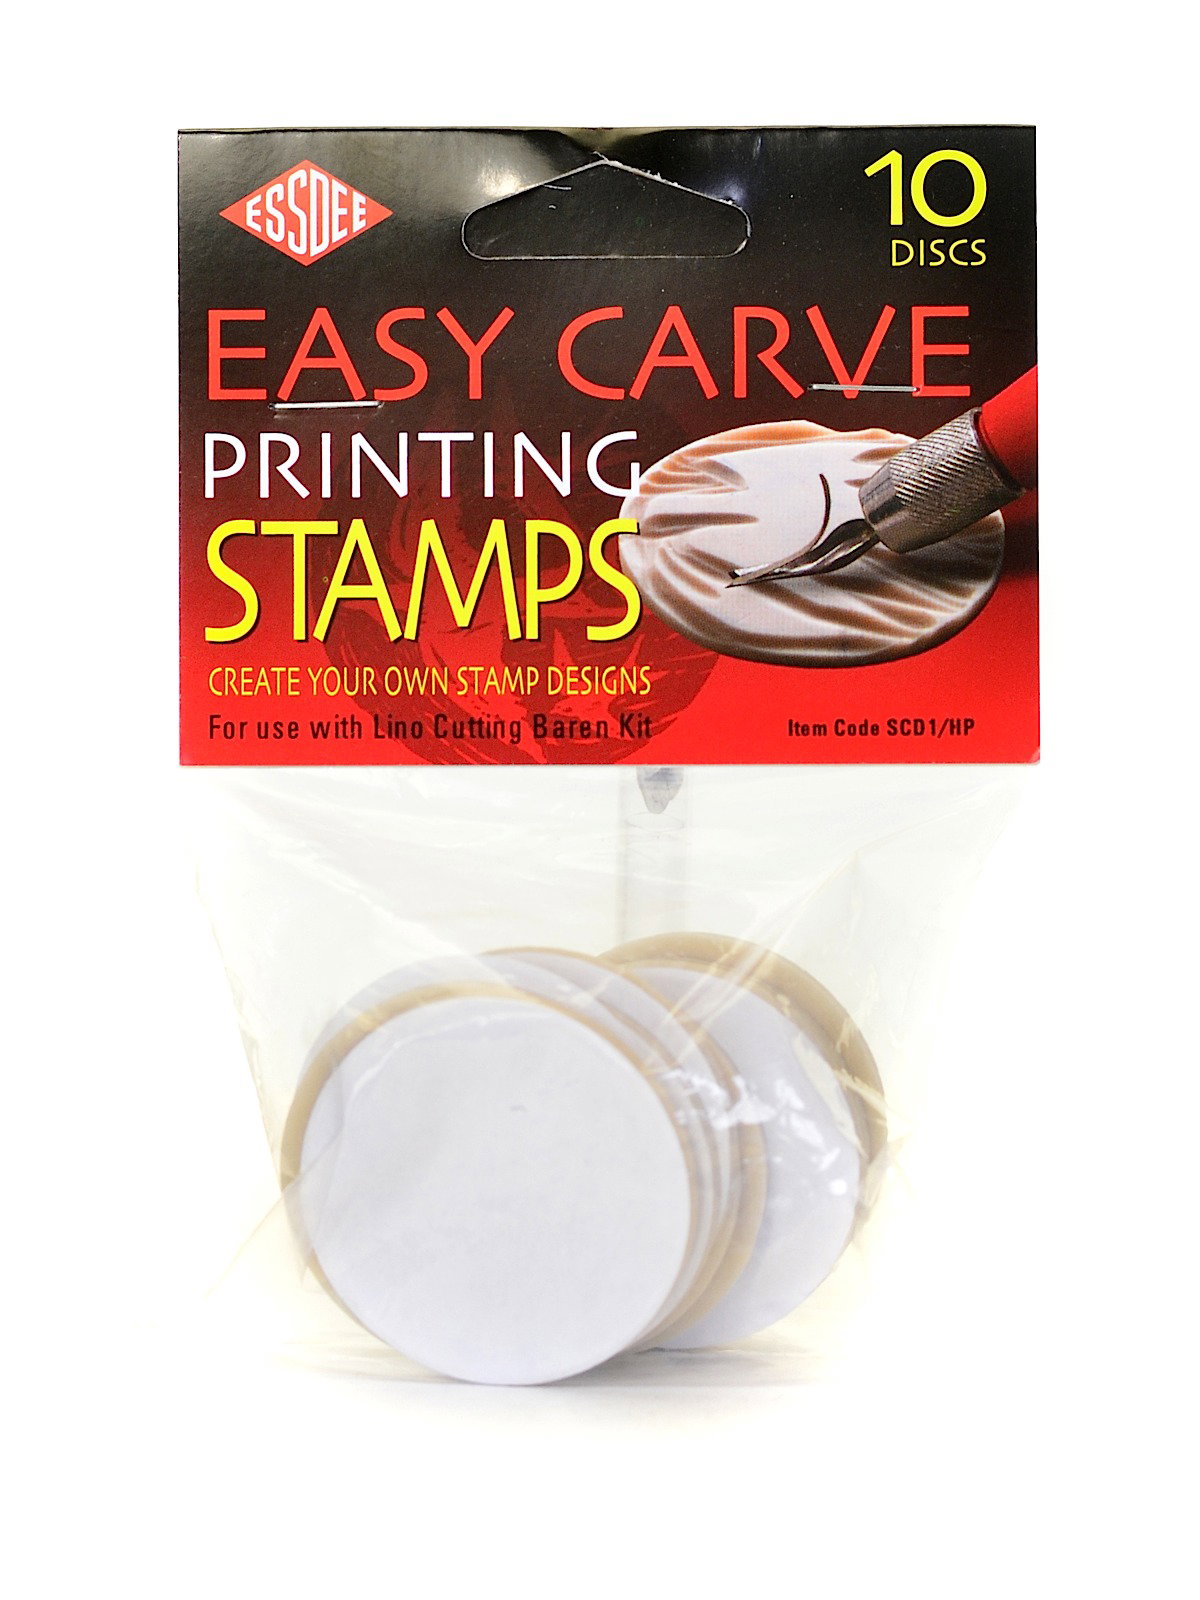 Essdee : Mastercut Stamp Carving Kit - Sets - Printmaking - Color